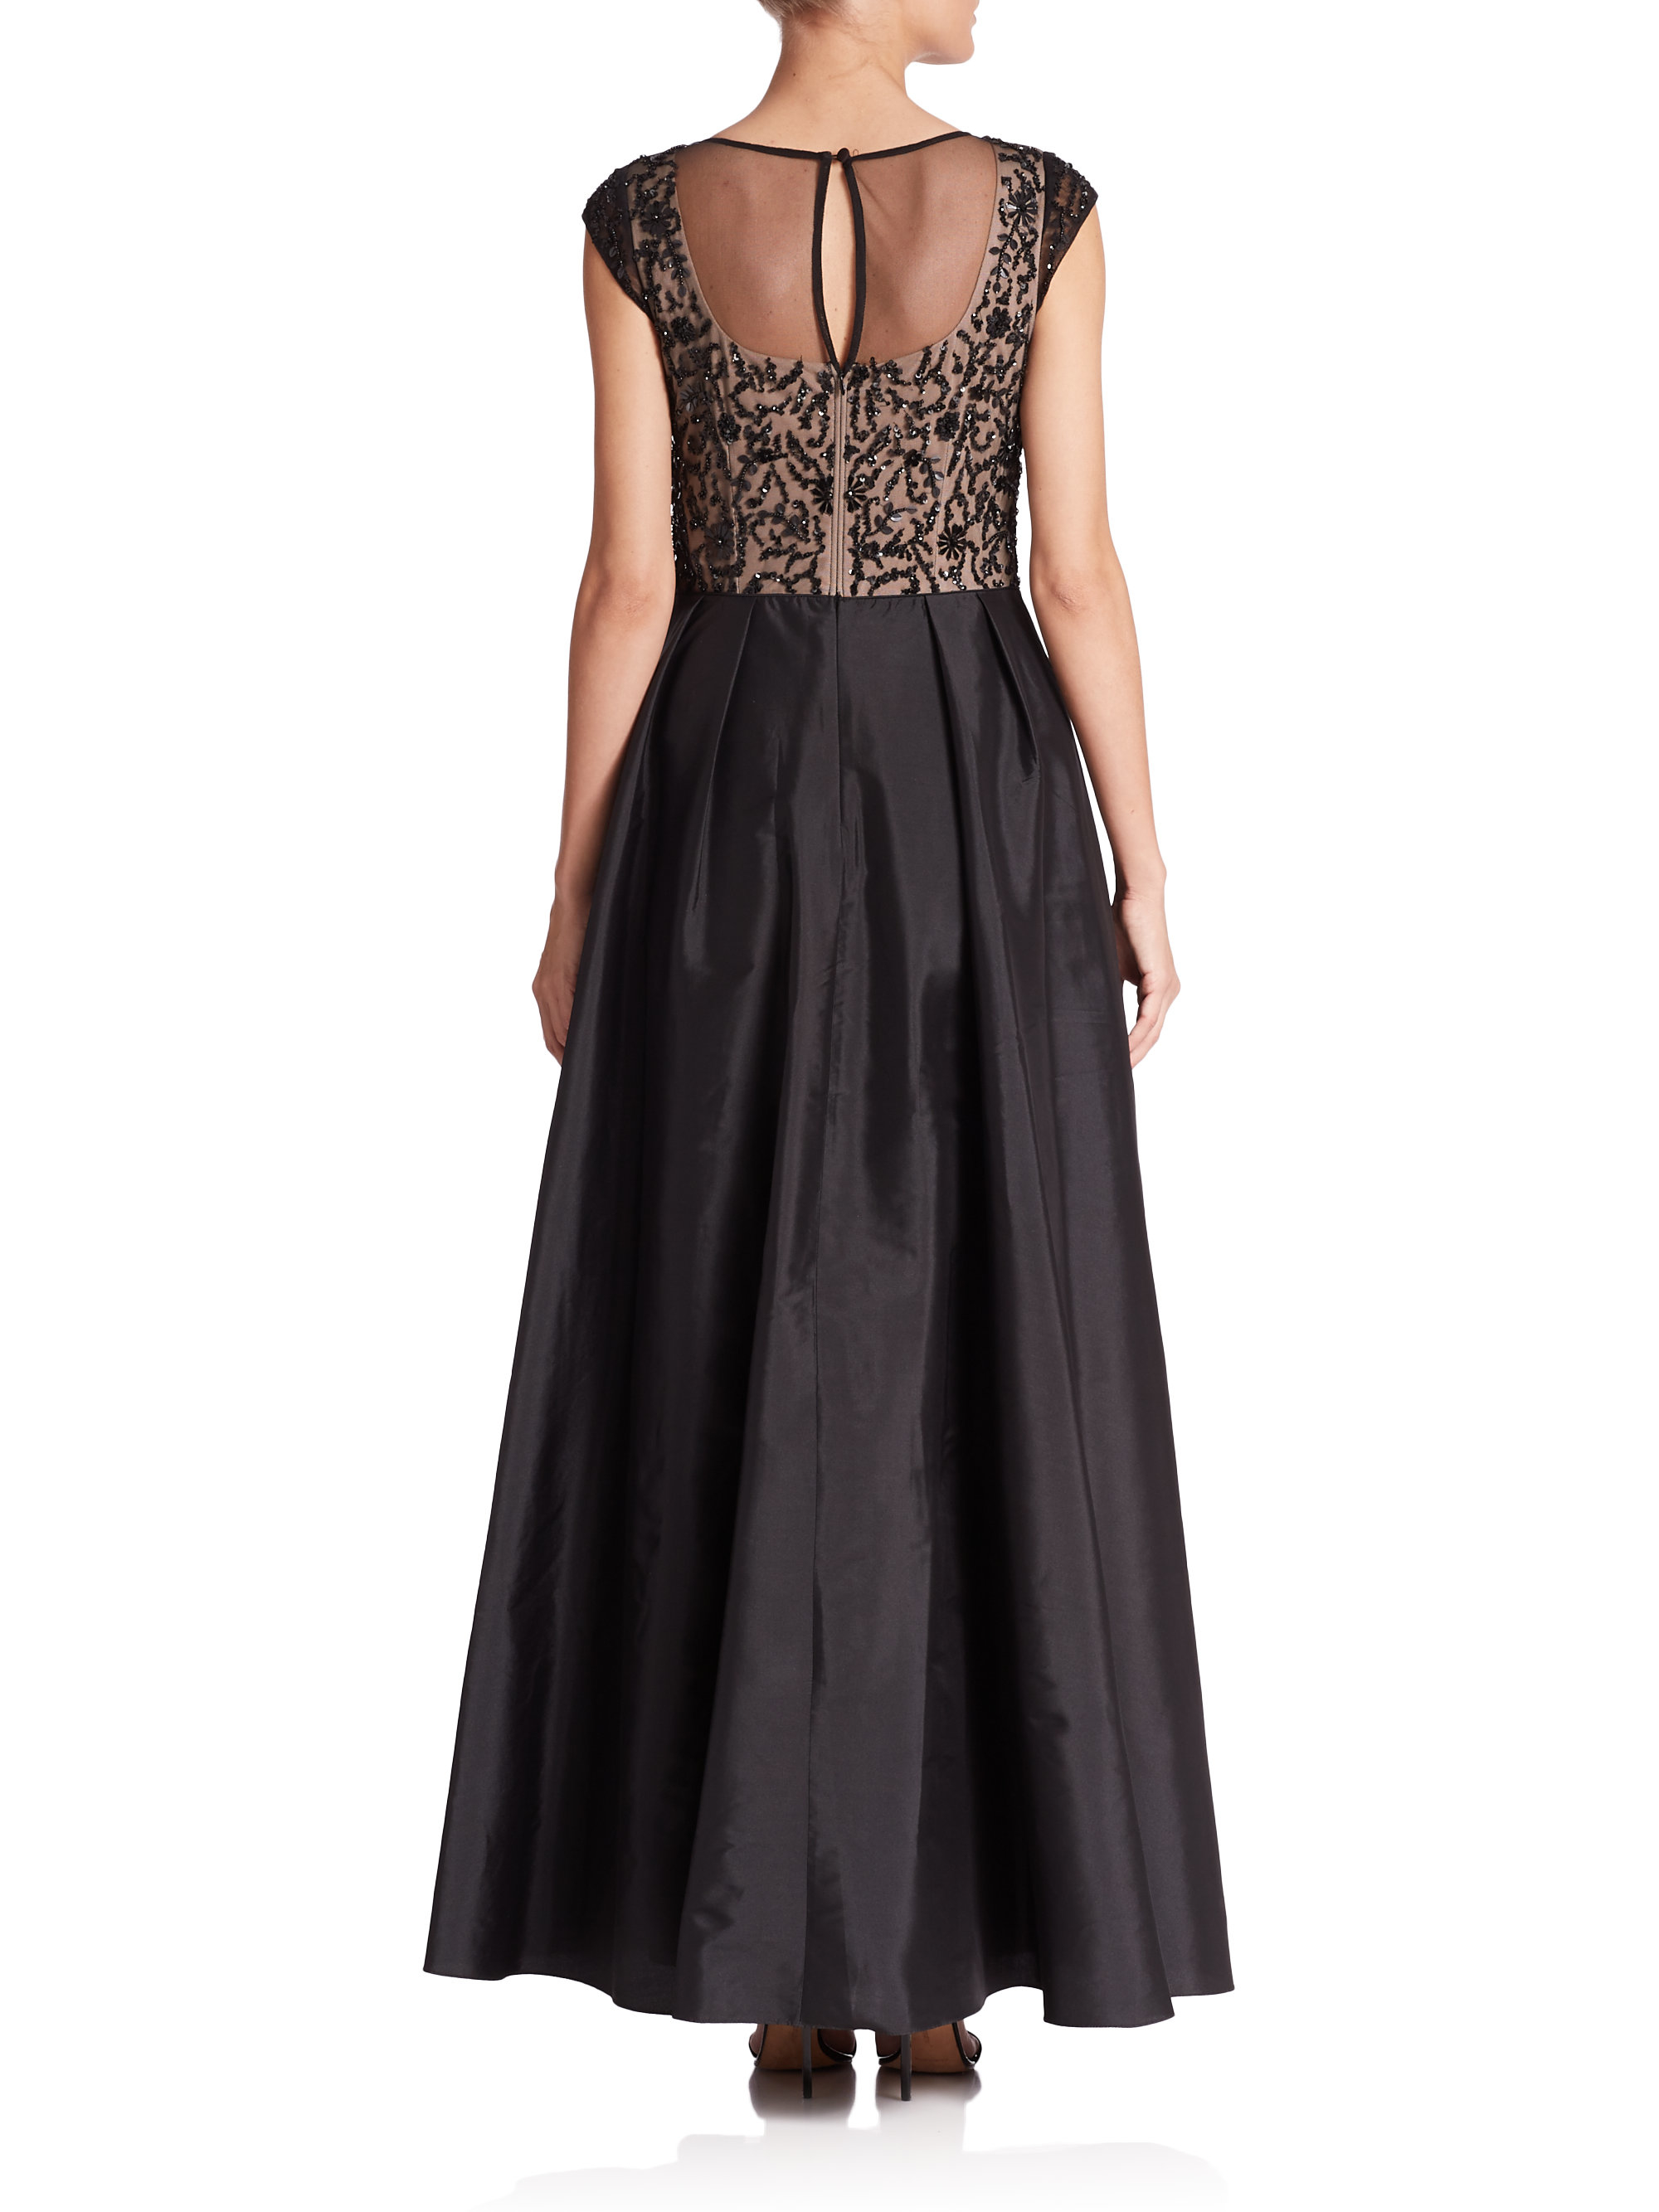 Lyst - Aidan Mattox Embellished Mesh & Taffeta Ball Gown in Black